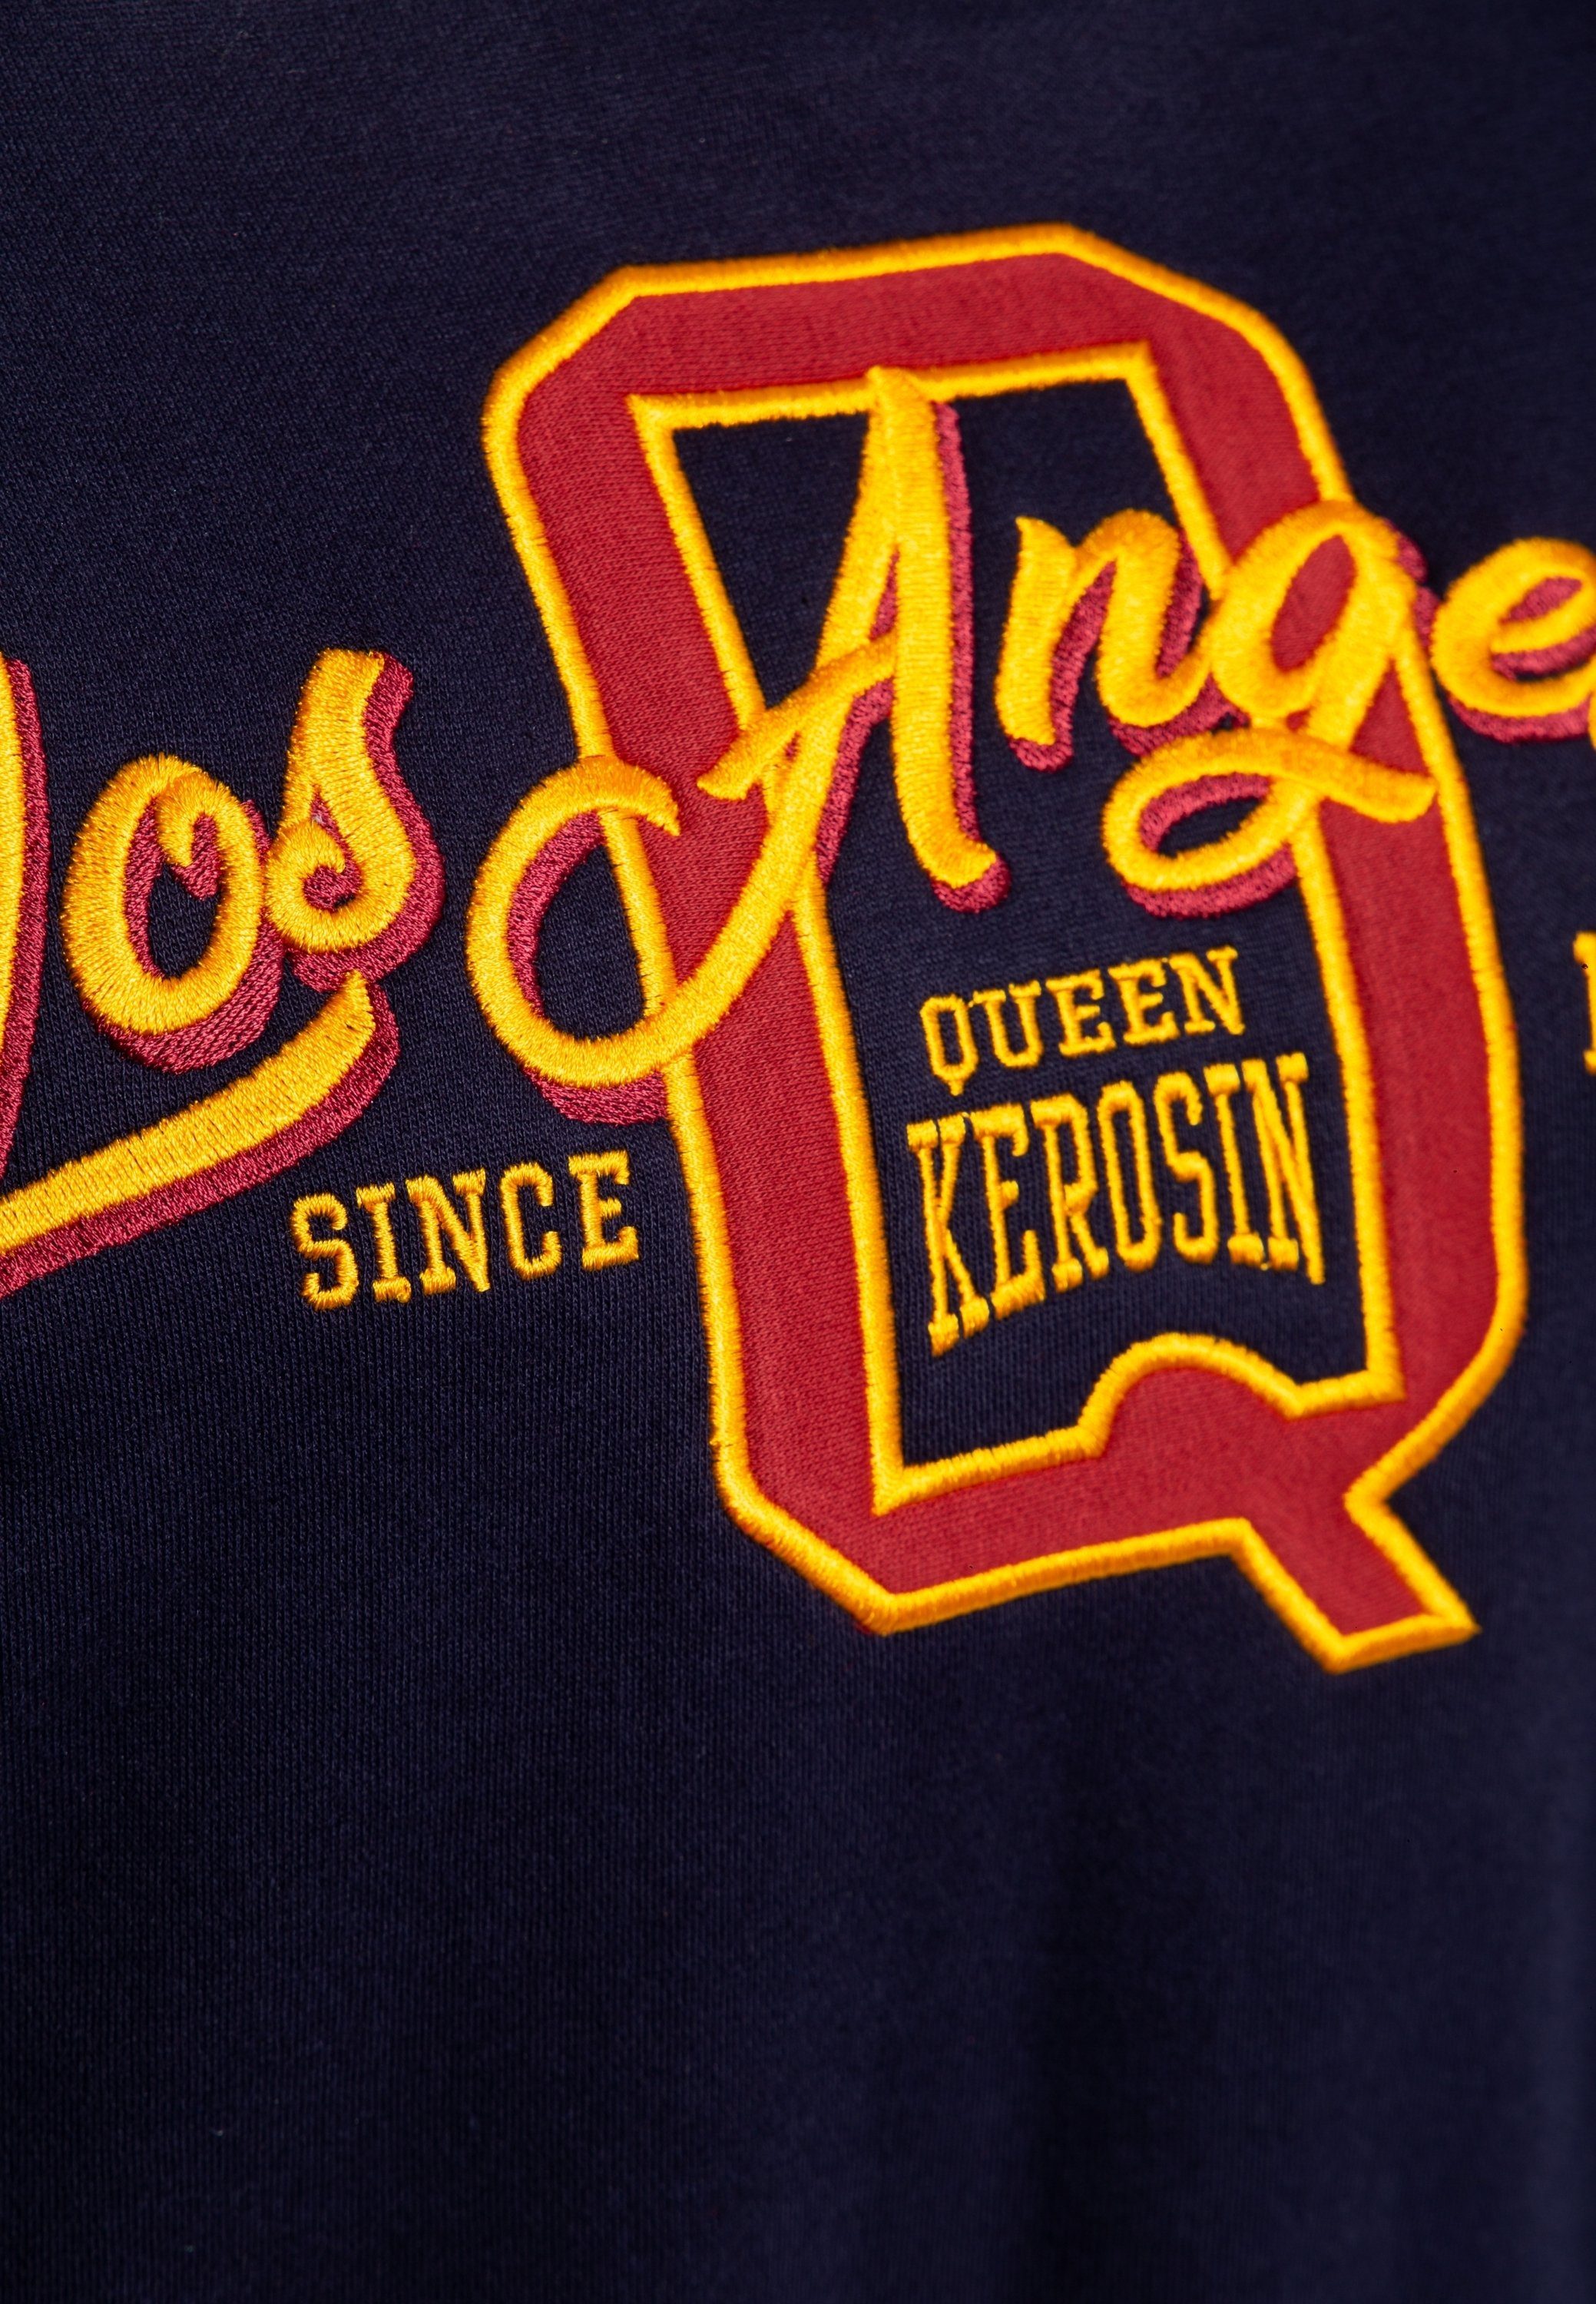 College-Style L.A. im mit Q. Retro-Stickerei QueenKerosin Sweater